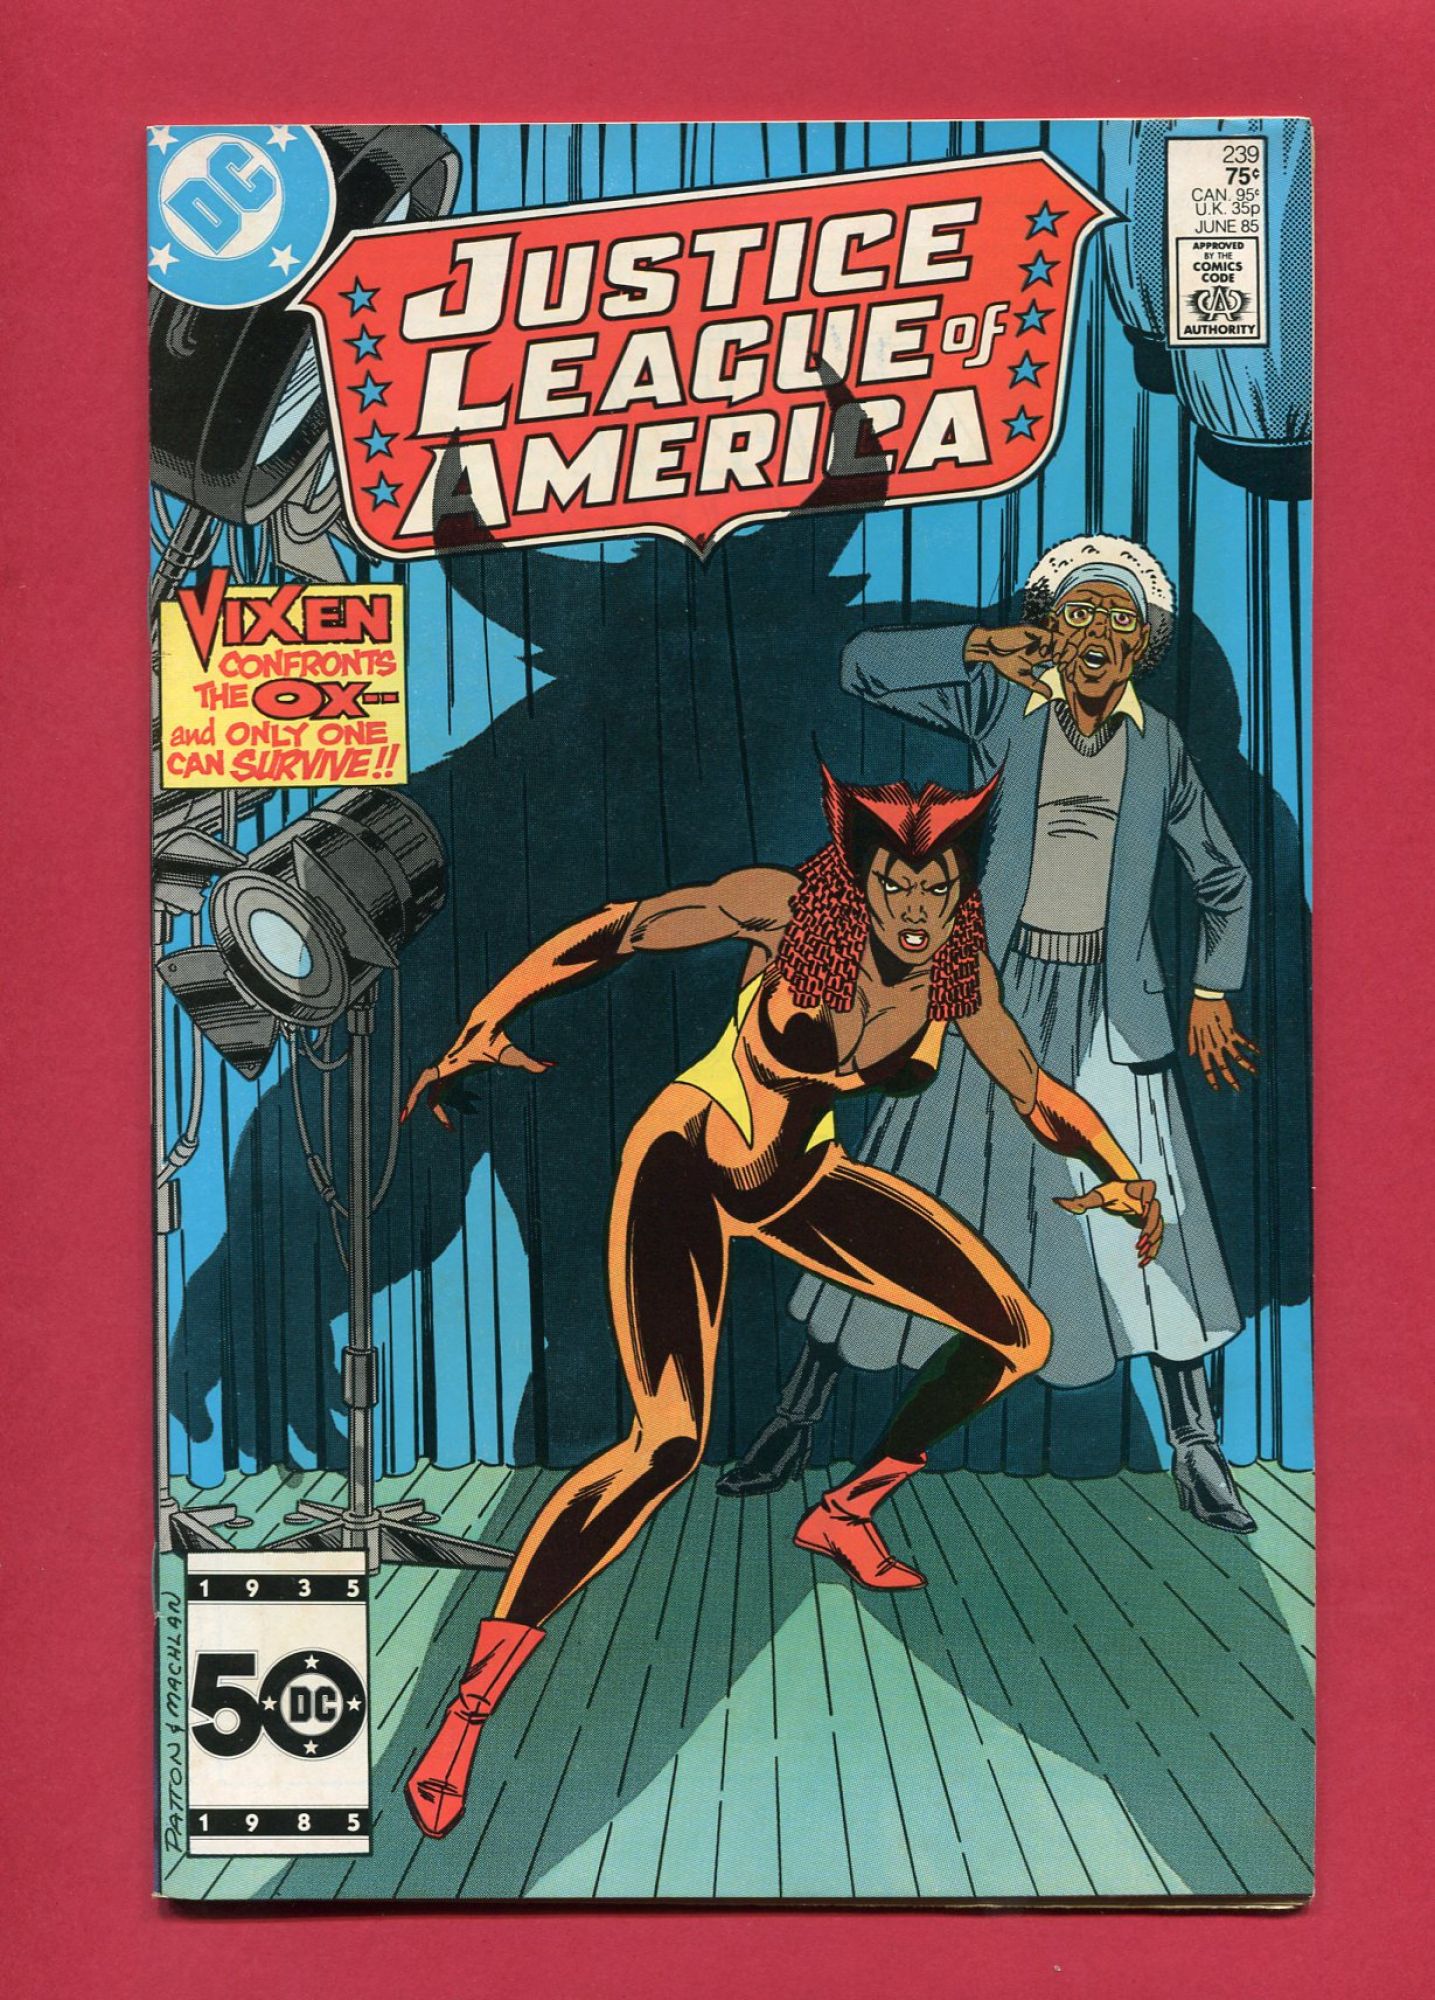 Justice League of America (Volume 1 1960) #239, Jun 1985, 9.2 NM-